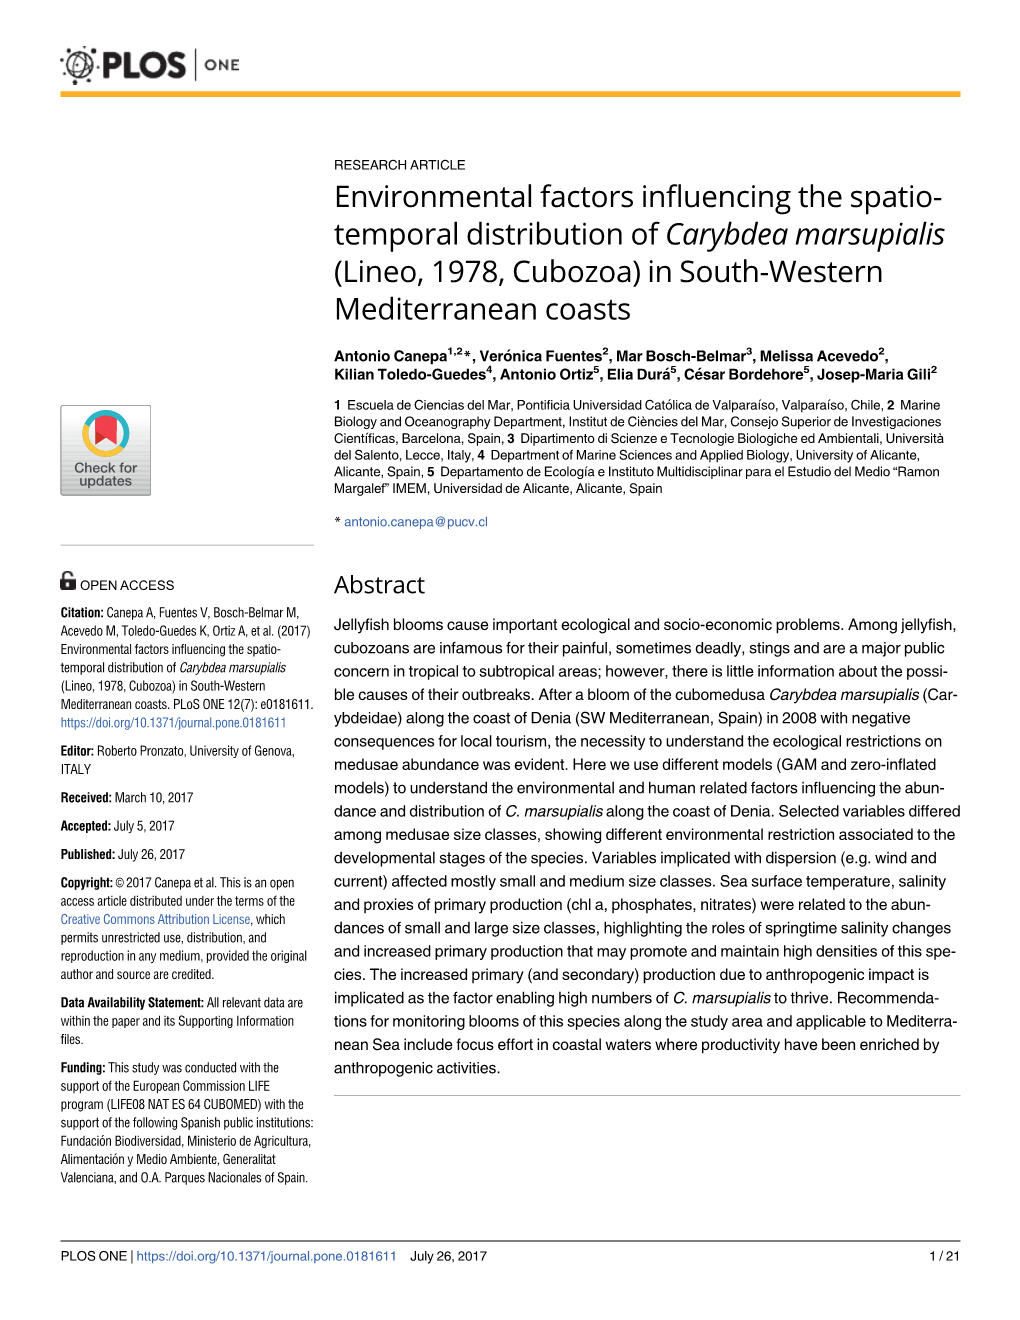 Environmental Factors Influencing the Spatio-Temporal Distribution Of